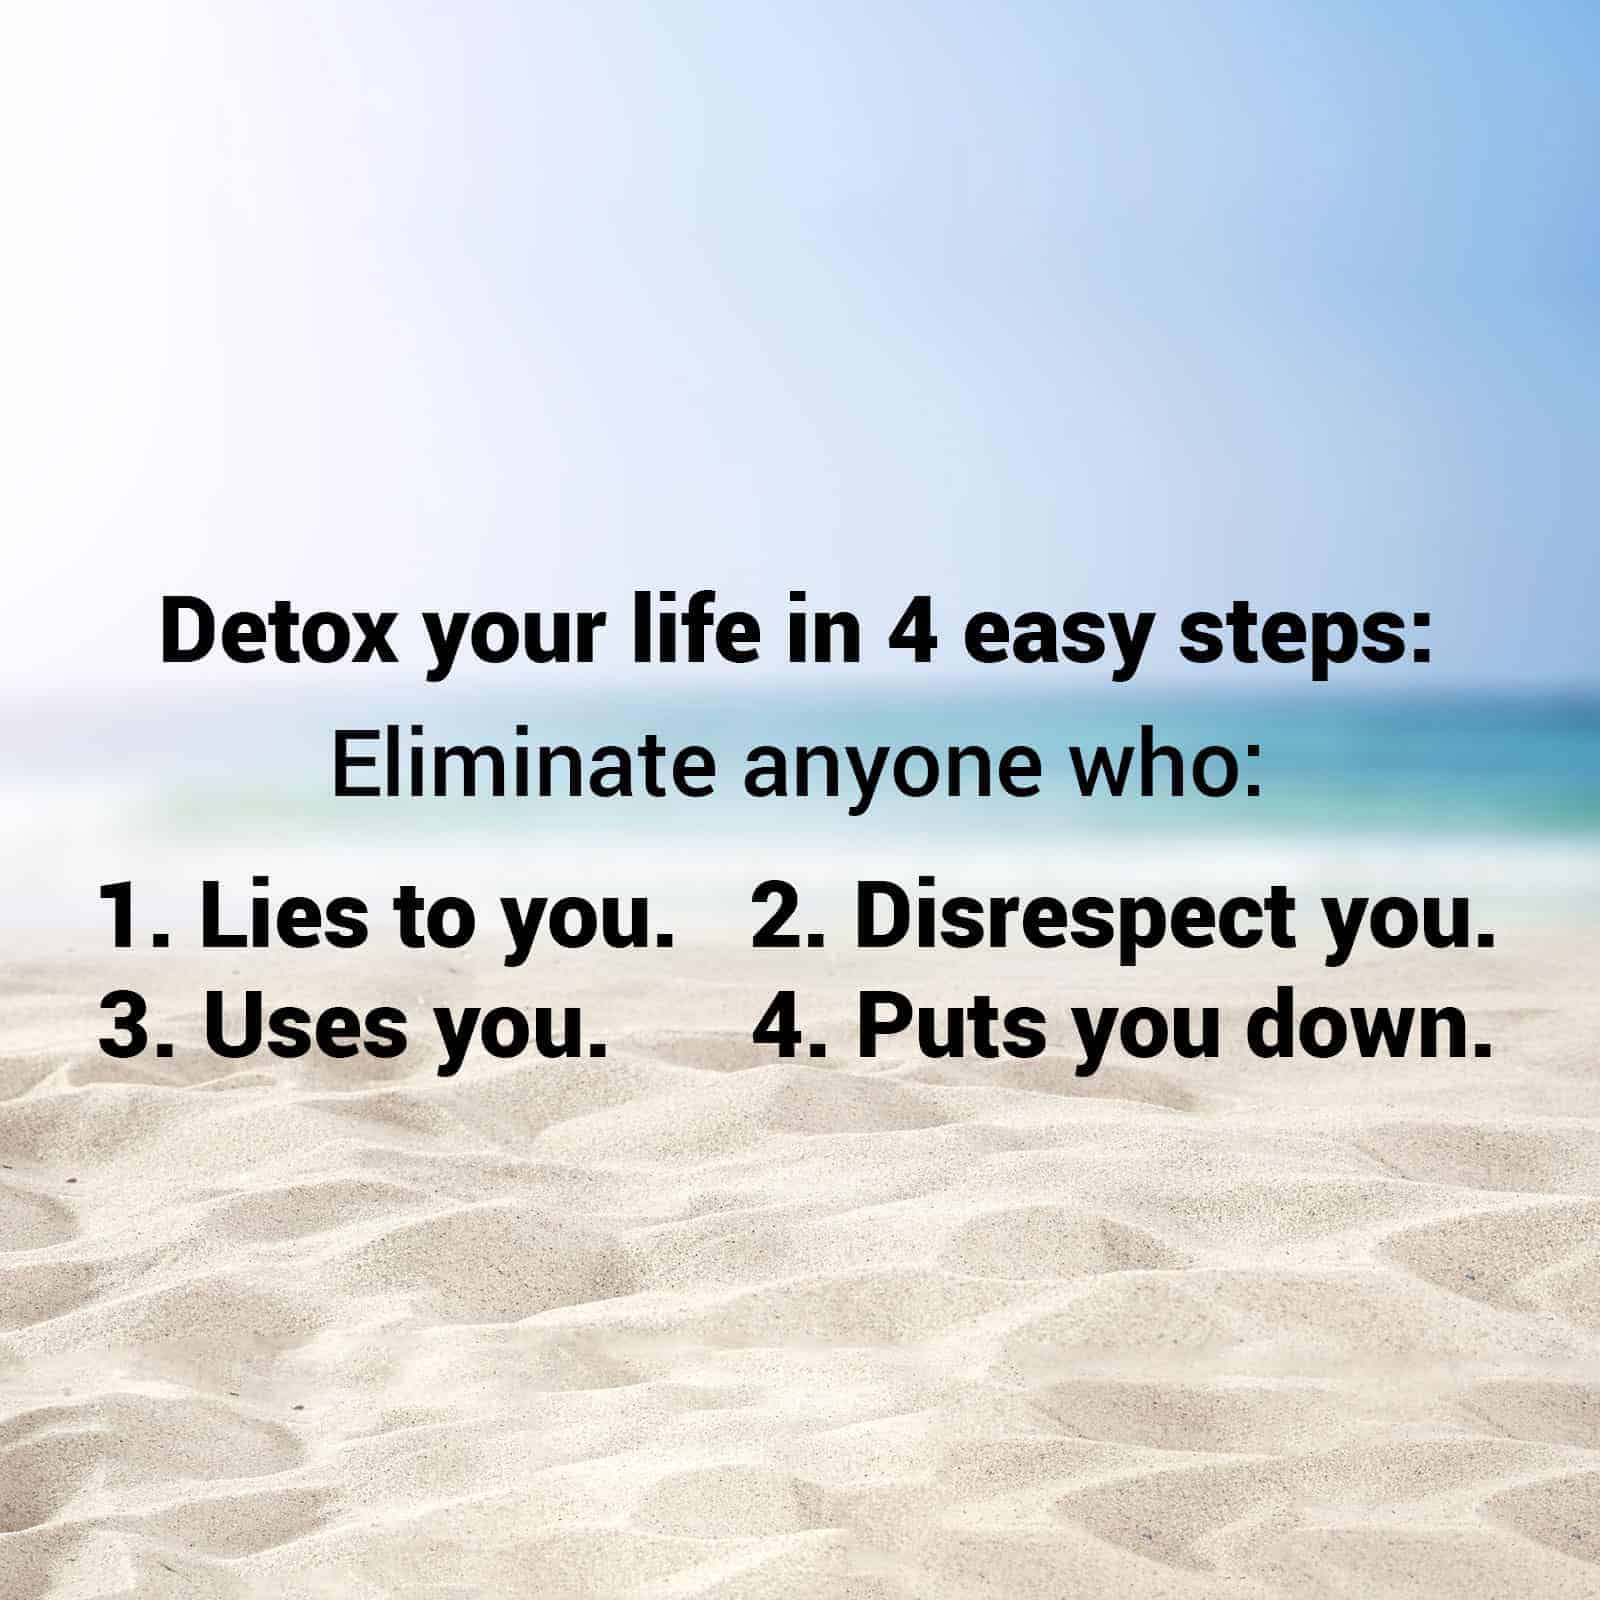 10 Ways to Detox Your Life